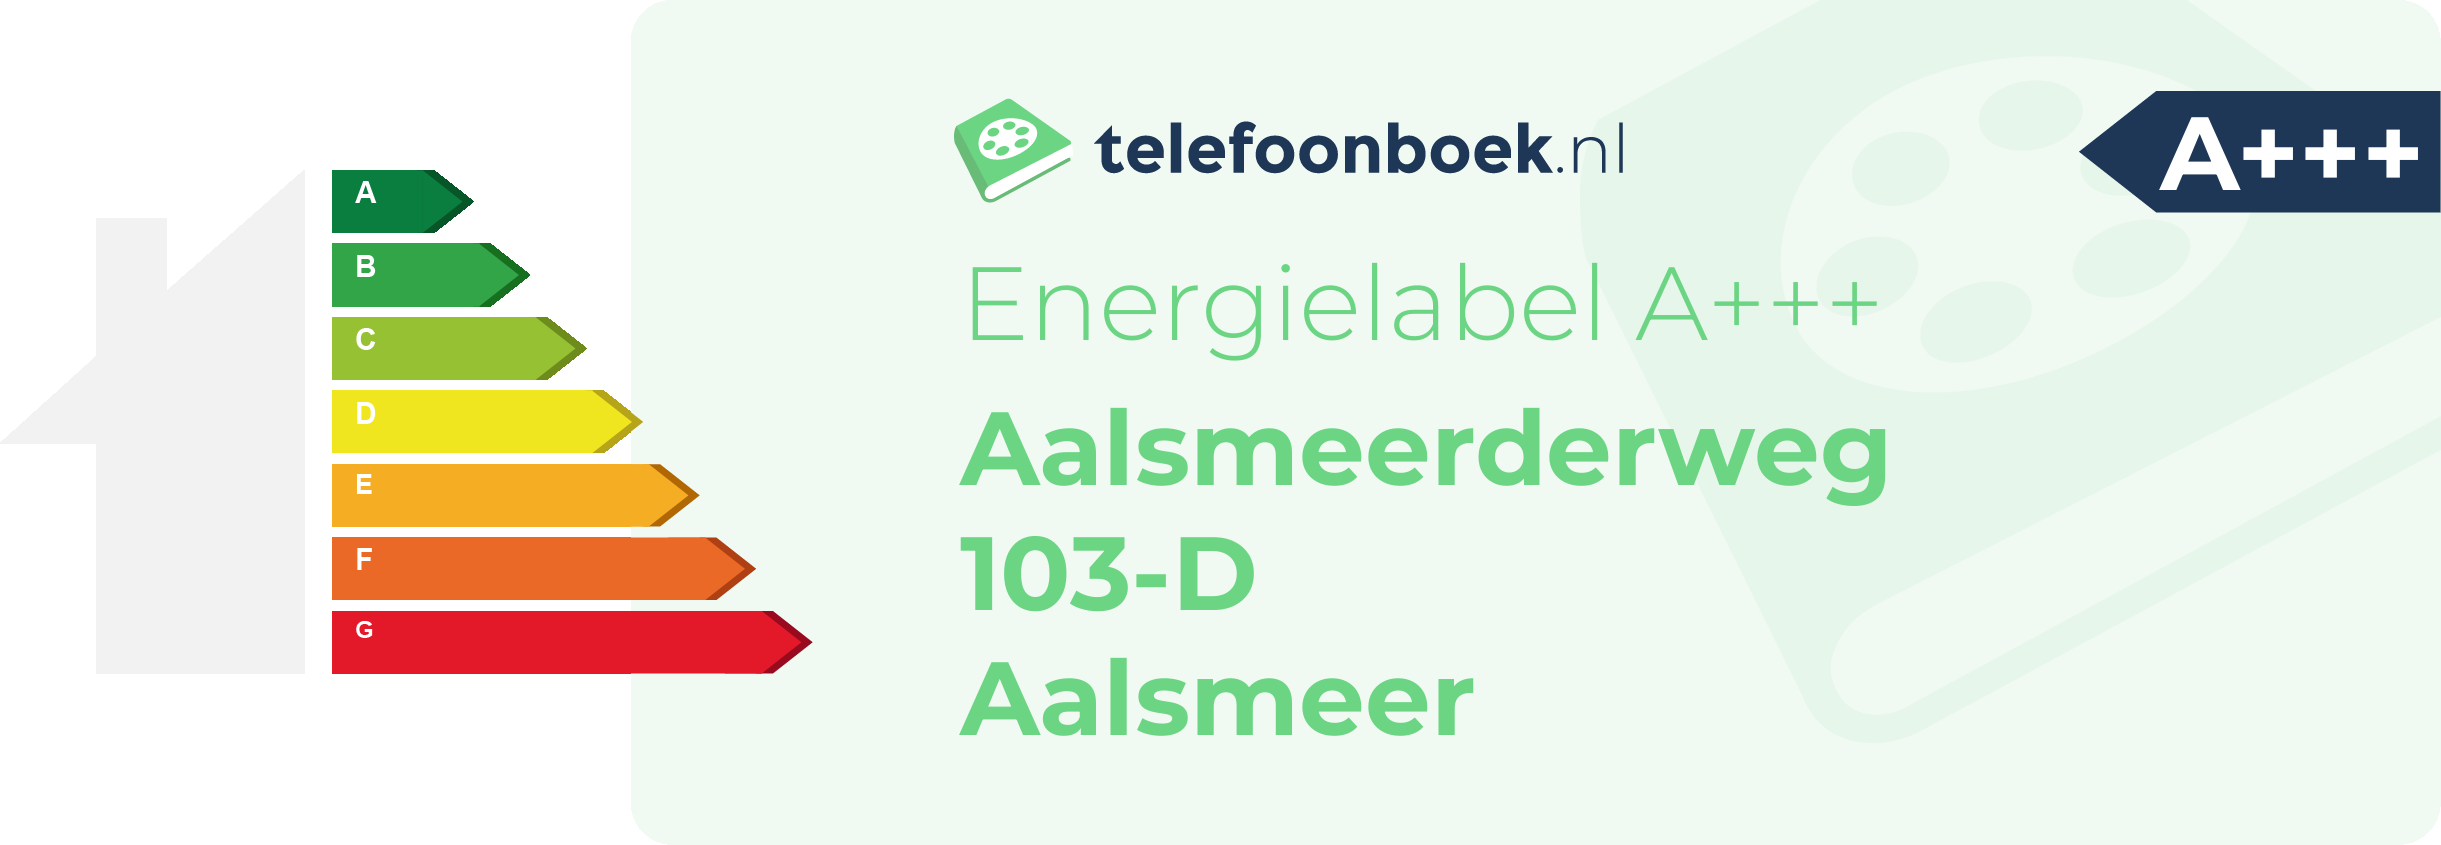 Energielabel Aalsmeerderweg 103-D Aalsmeer